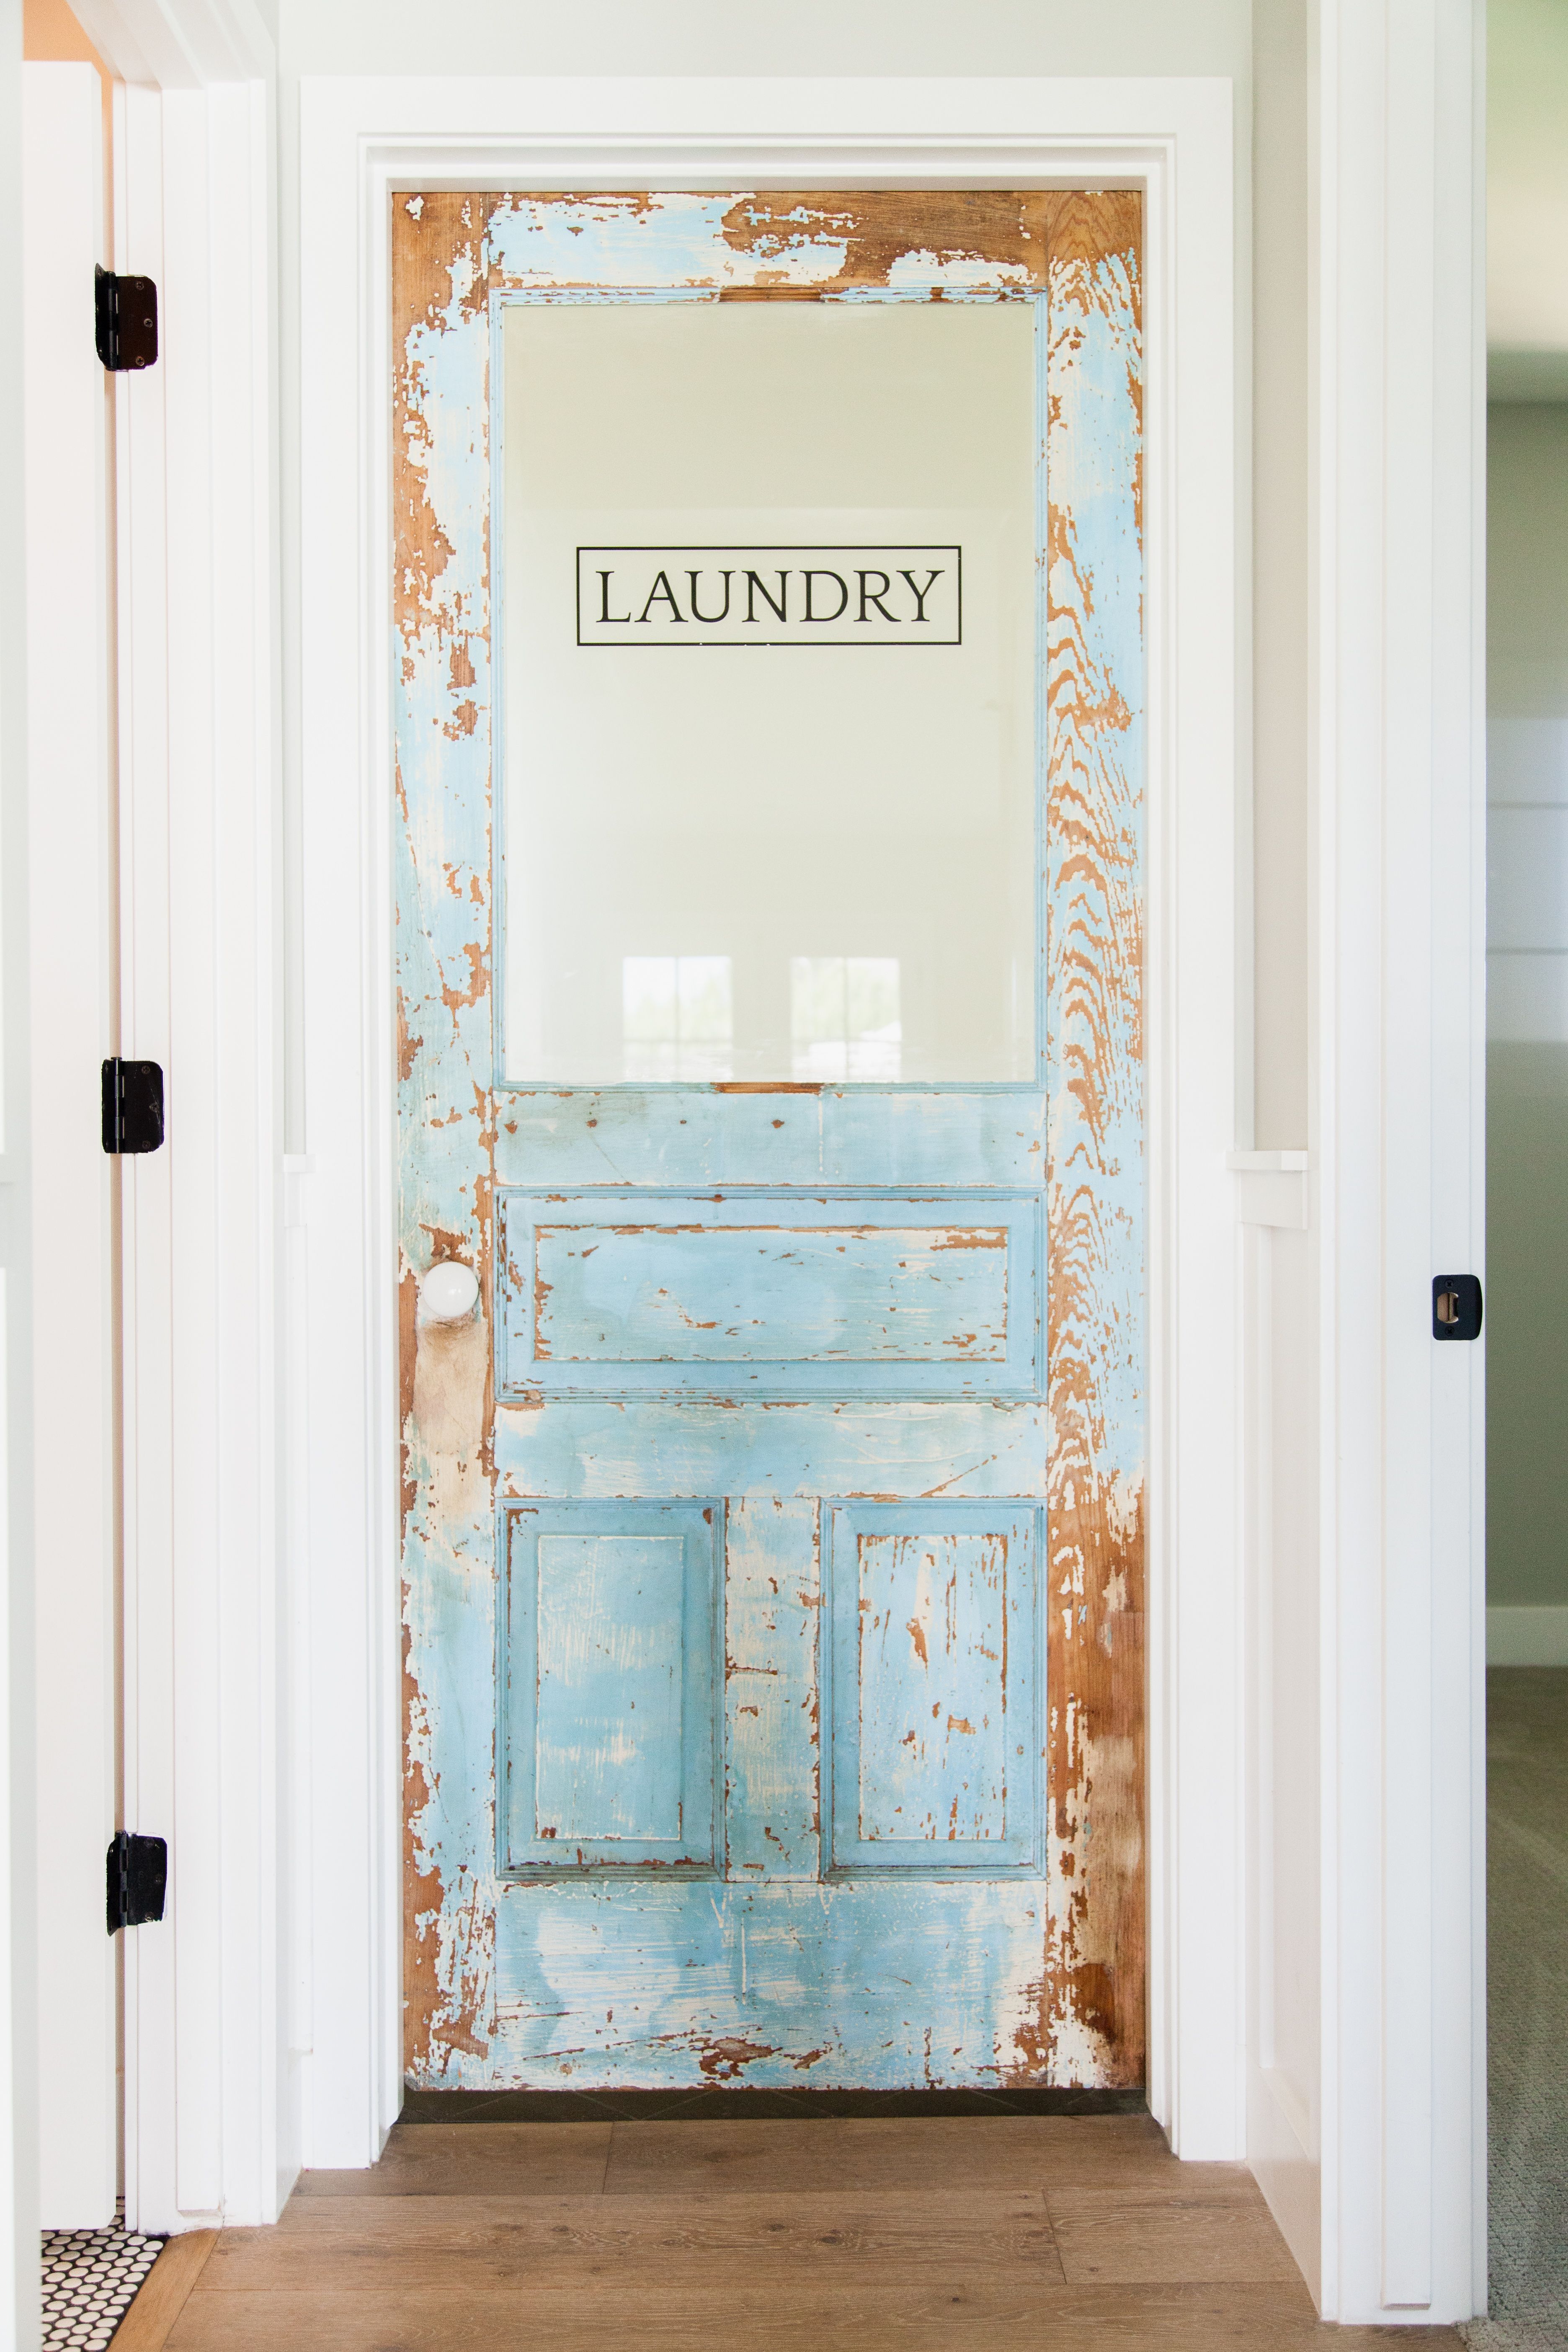 Custom laundry door with original vintage paint – by Rafterhouse.